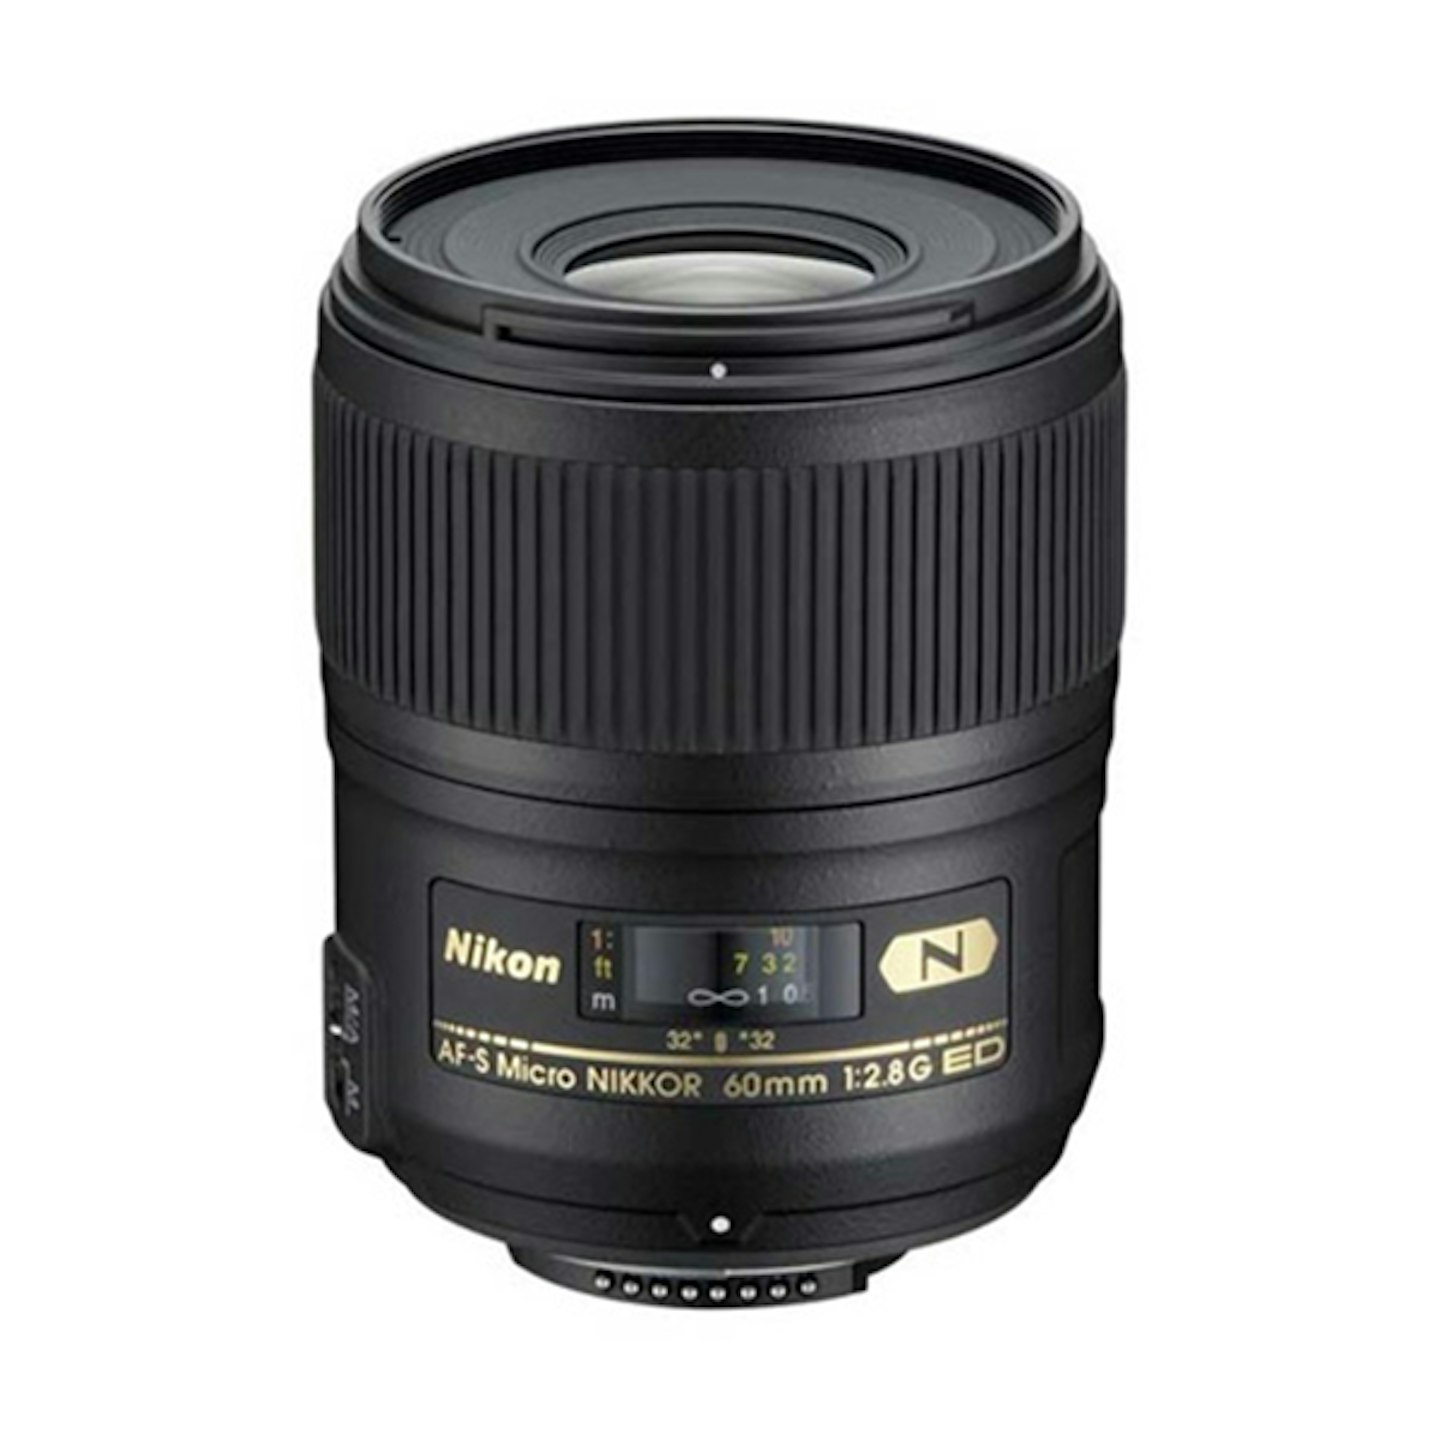 Nikon AF-S Micro Nikkor 60mm F/2.8G ED Macro Lens